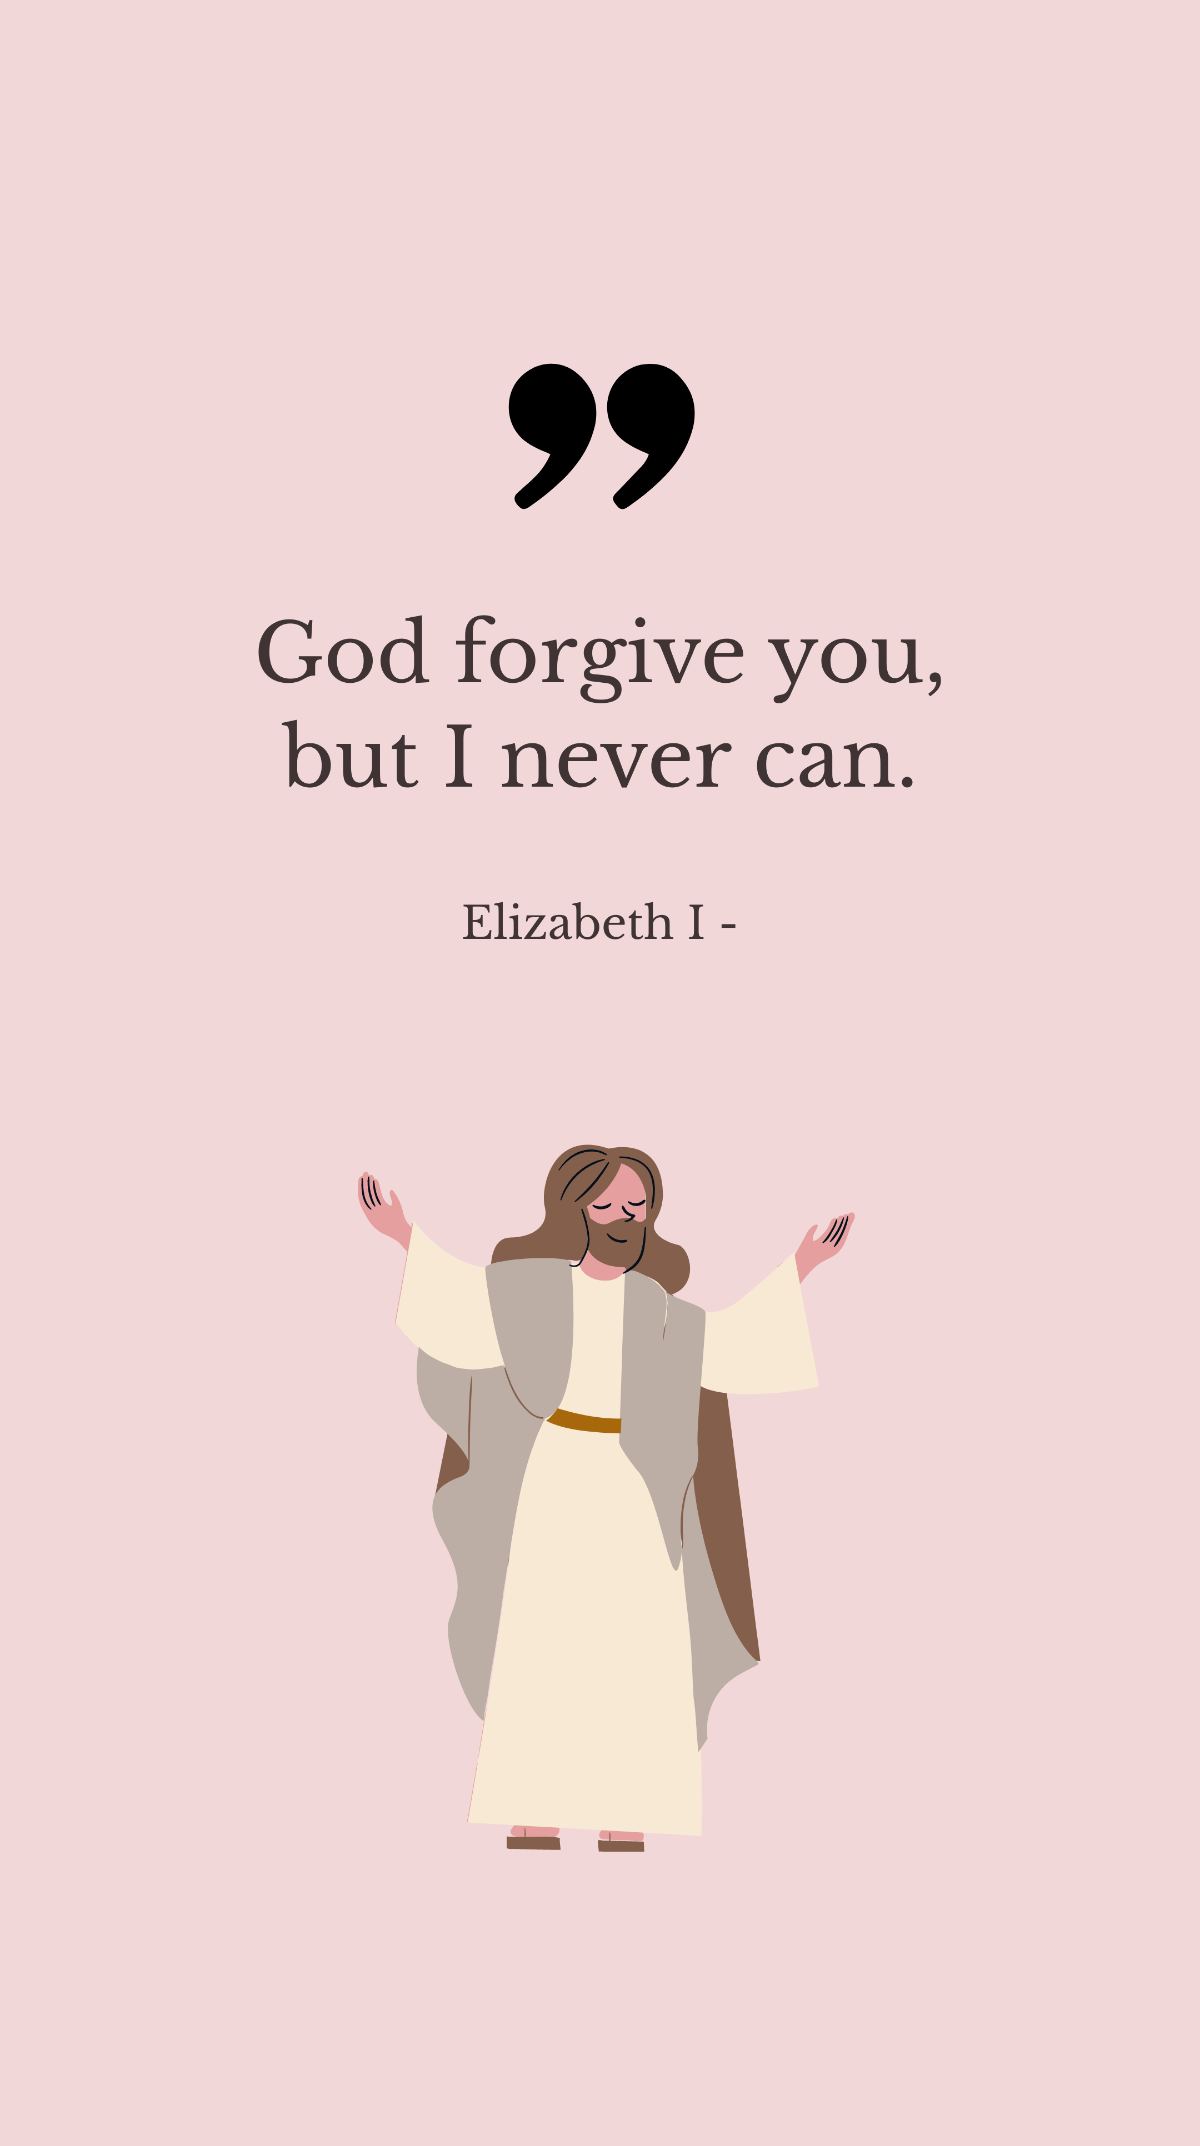 Elizabeth I - God forgive you, but I never can. Template